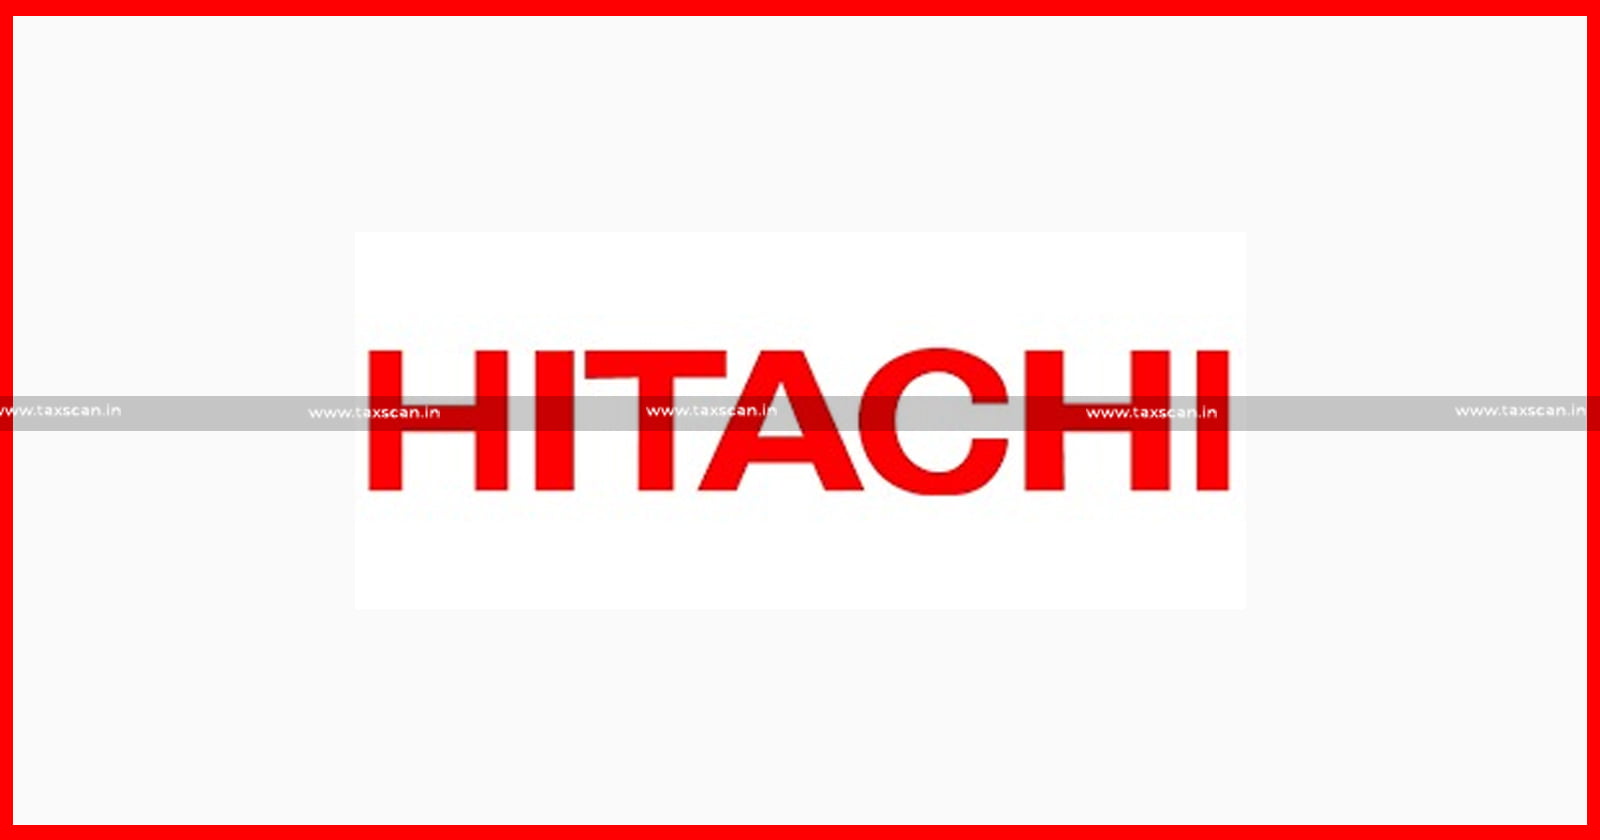 CA Vacancy in Hitachi - CA Careers - CA Jobs - Chartered Accountant Opportunities - CA Vacancies - Chartered Accountant Vacancies - Accounting Jobs - Accountant Vacancies - TAXSCAN